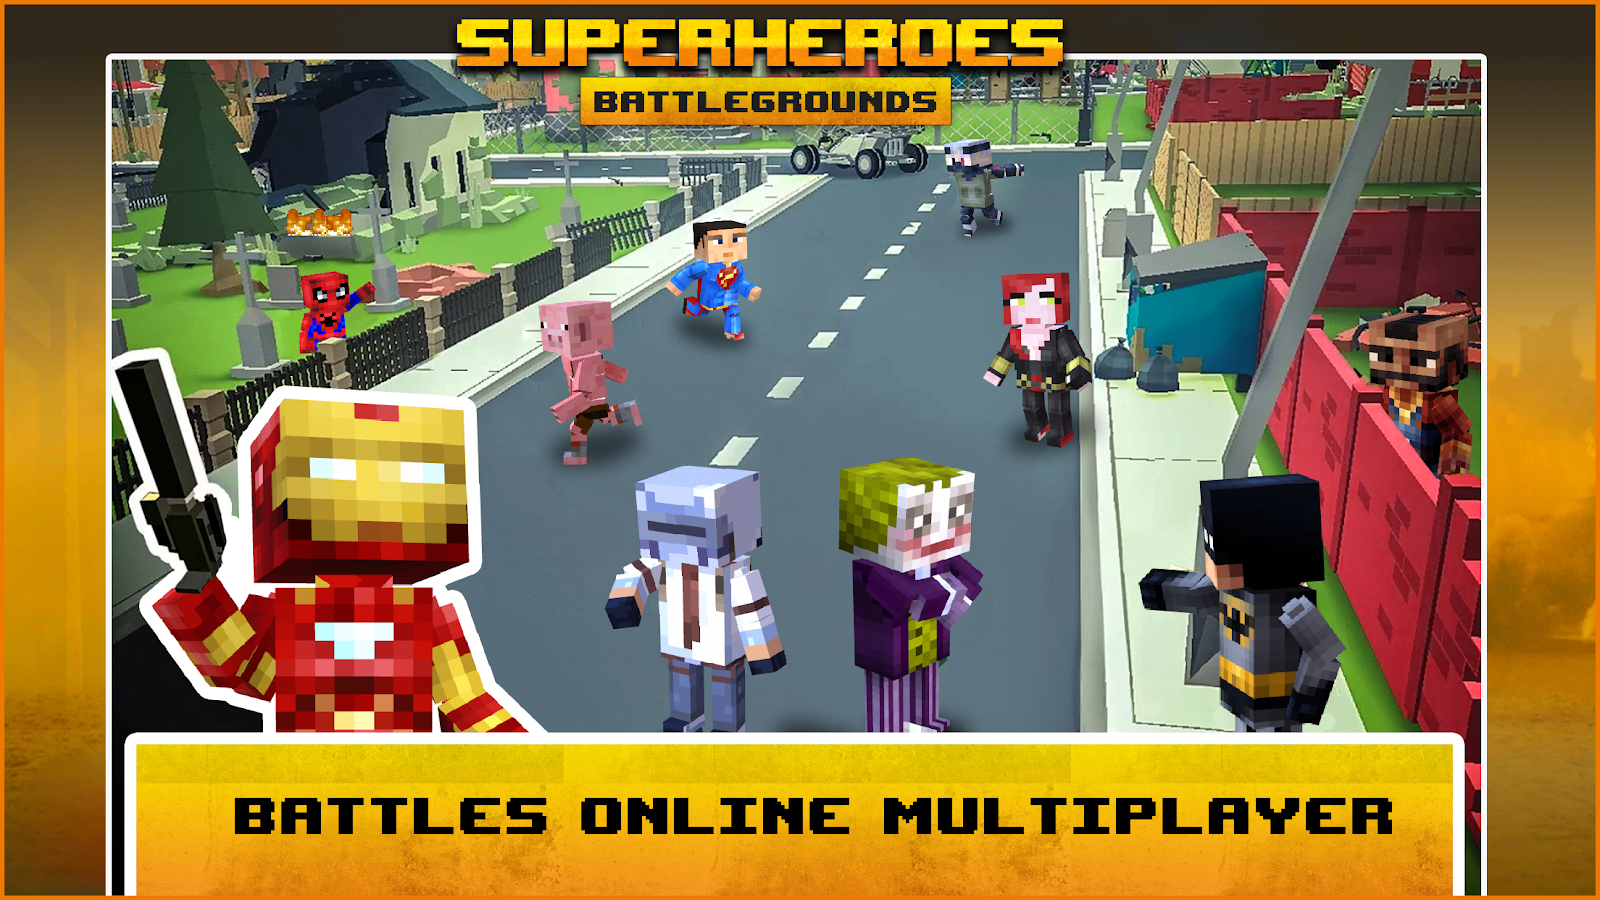 com.racing.games.mobile.superheroes.battlegrounds 0.0.15 APK ... - 